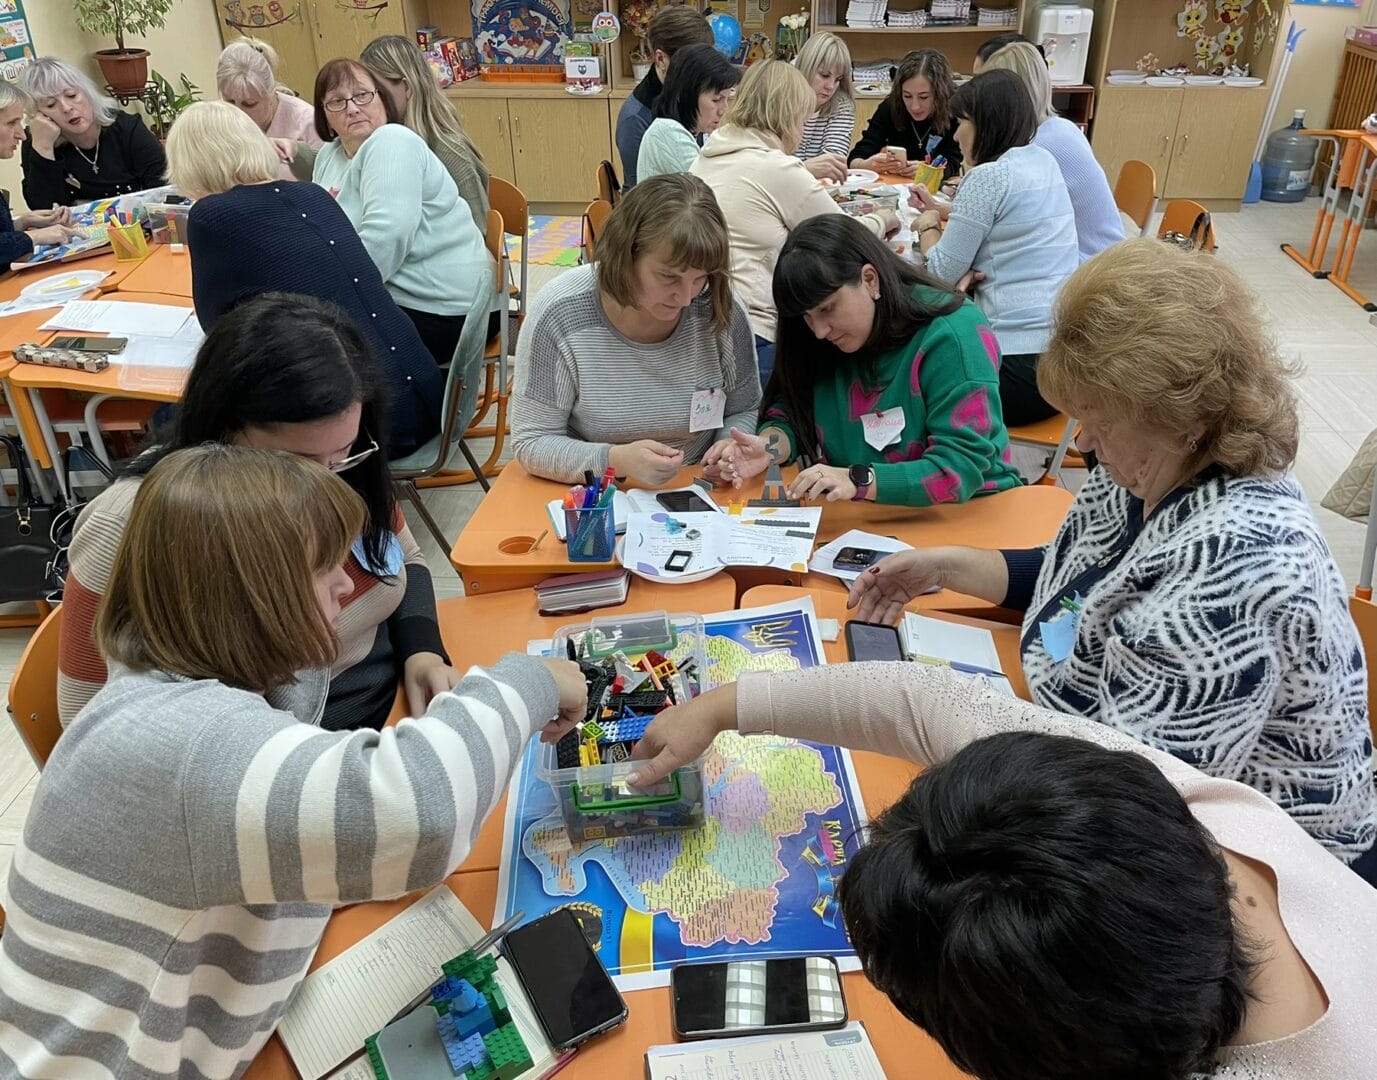 Educators of the Zviahel urban territorial community during The LEGO Foundation’s training 